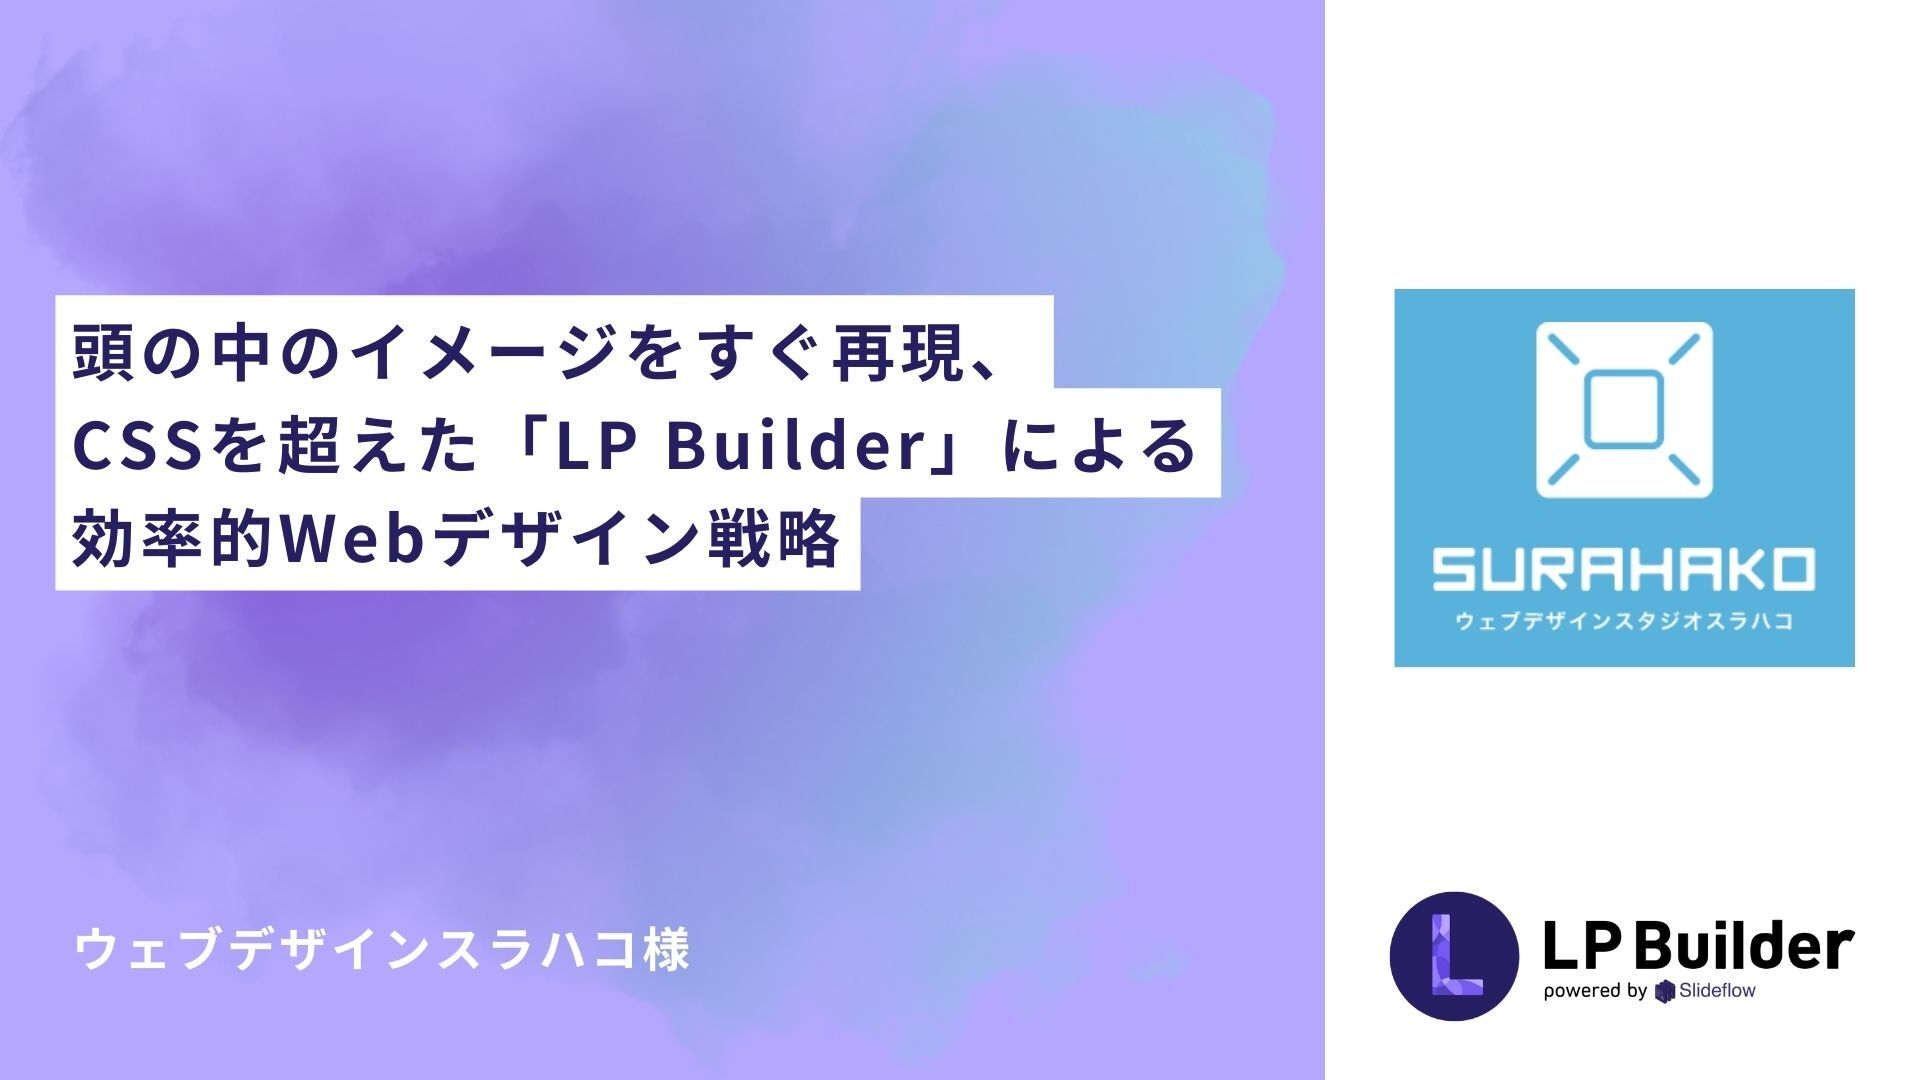 CloudCIRCUSのノーコードWeb制作ツール『LP Builder』からWeb販売実績を生み出した事例を初公開